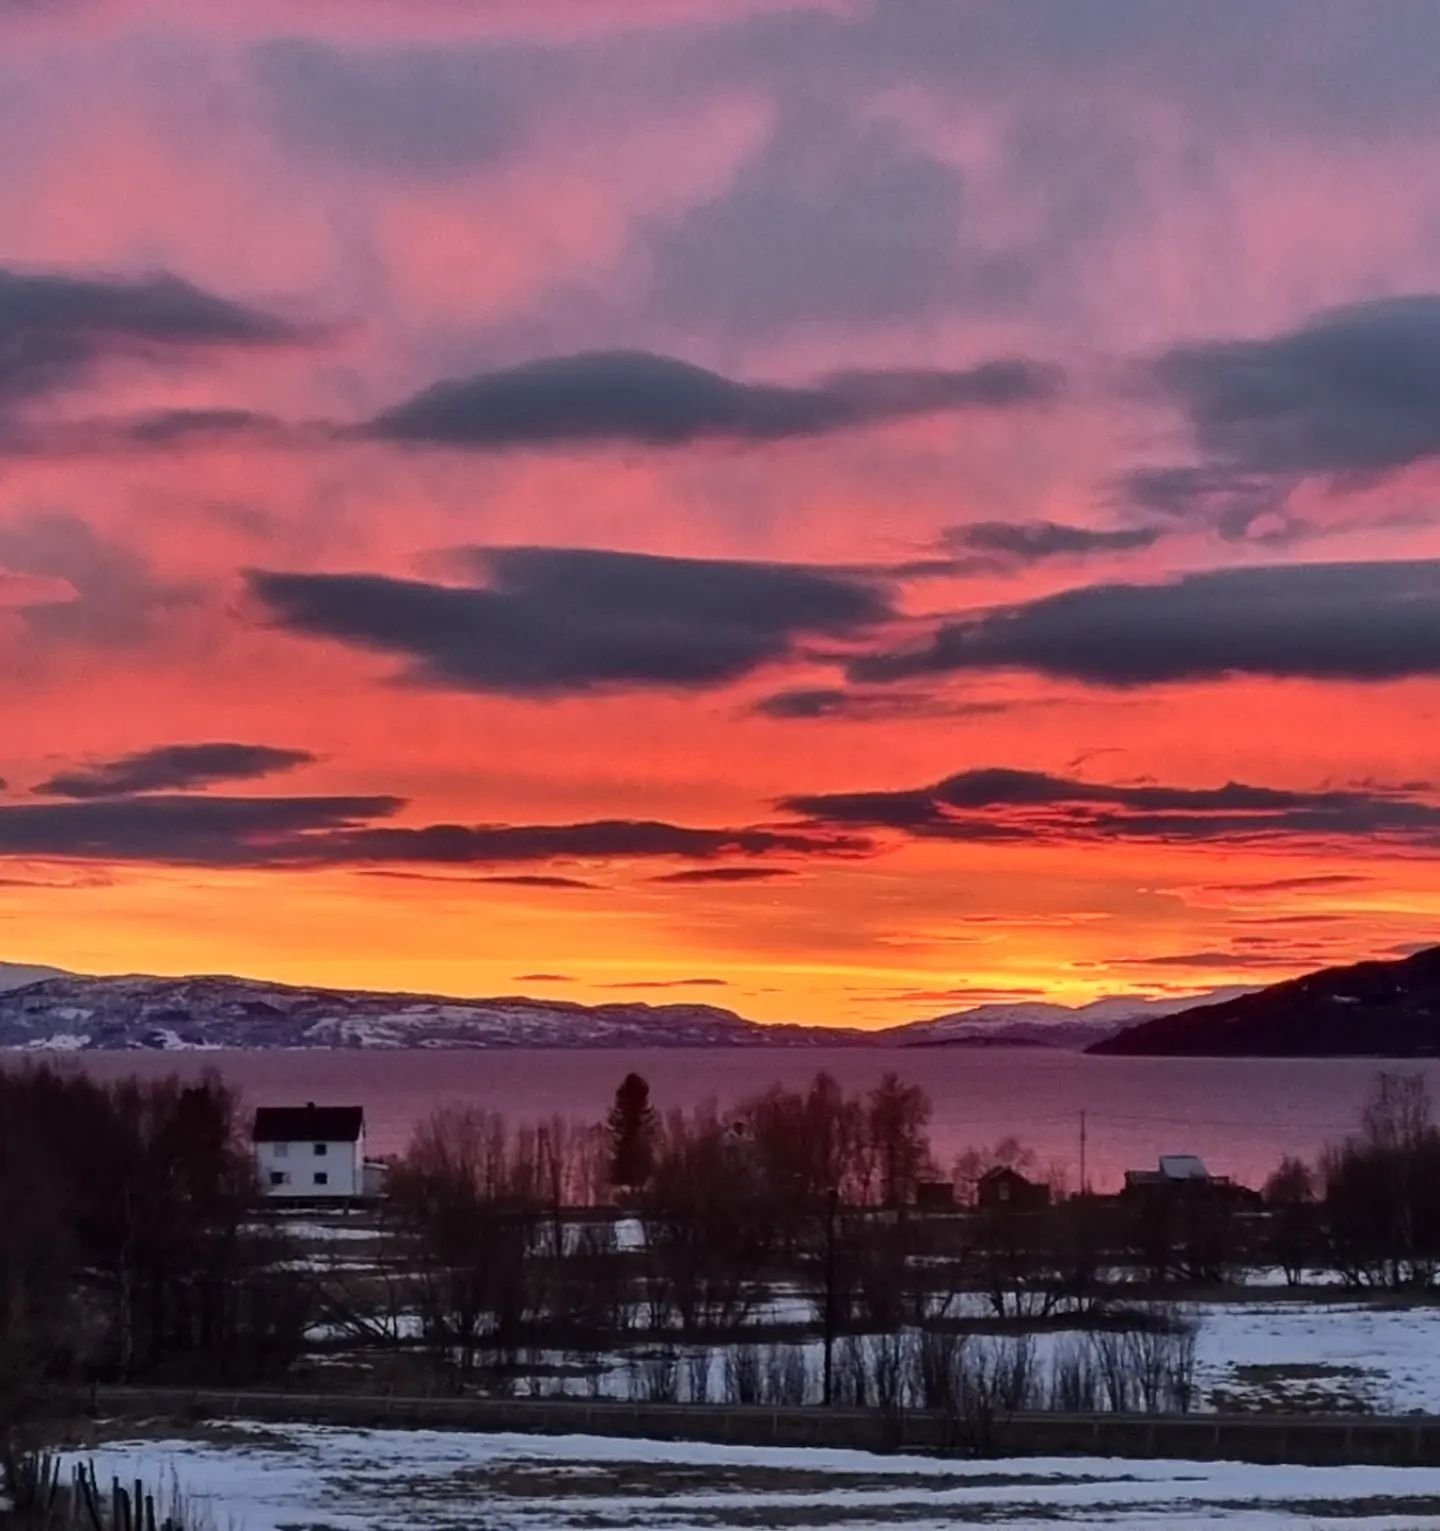 A house with a view...
Himmelen sto i brann i kveld. Malangen, Troms.